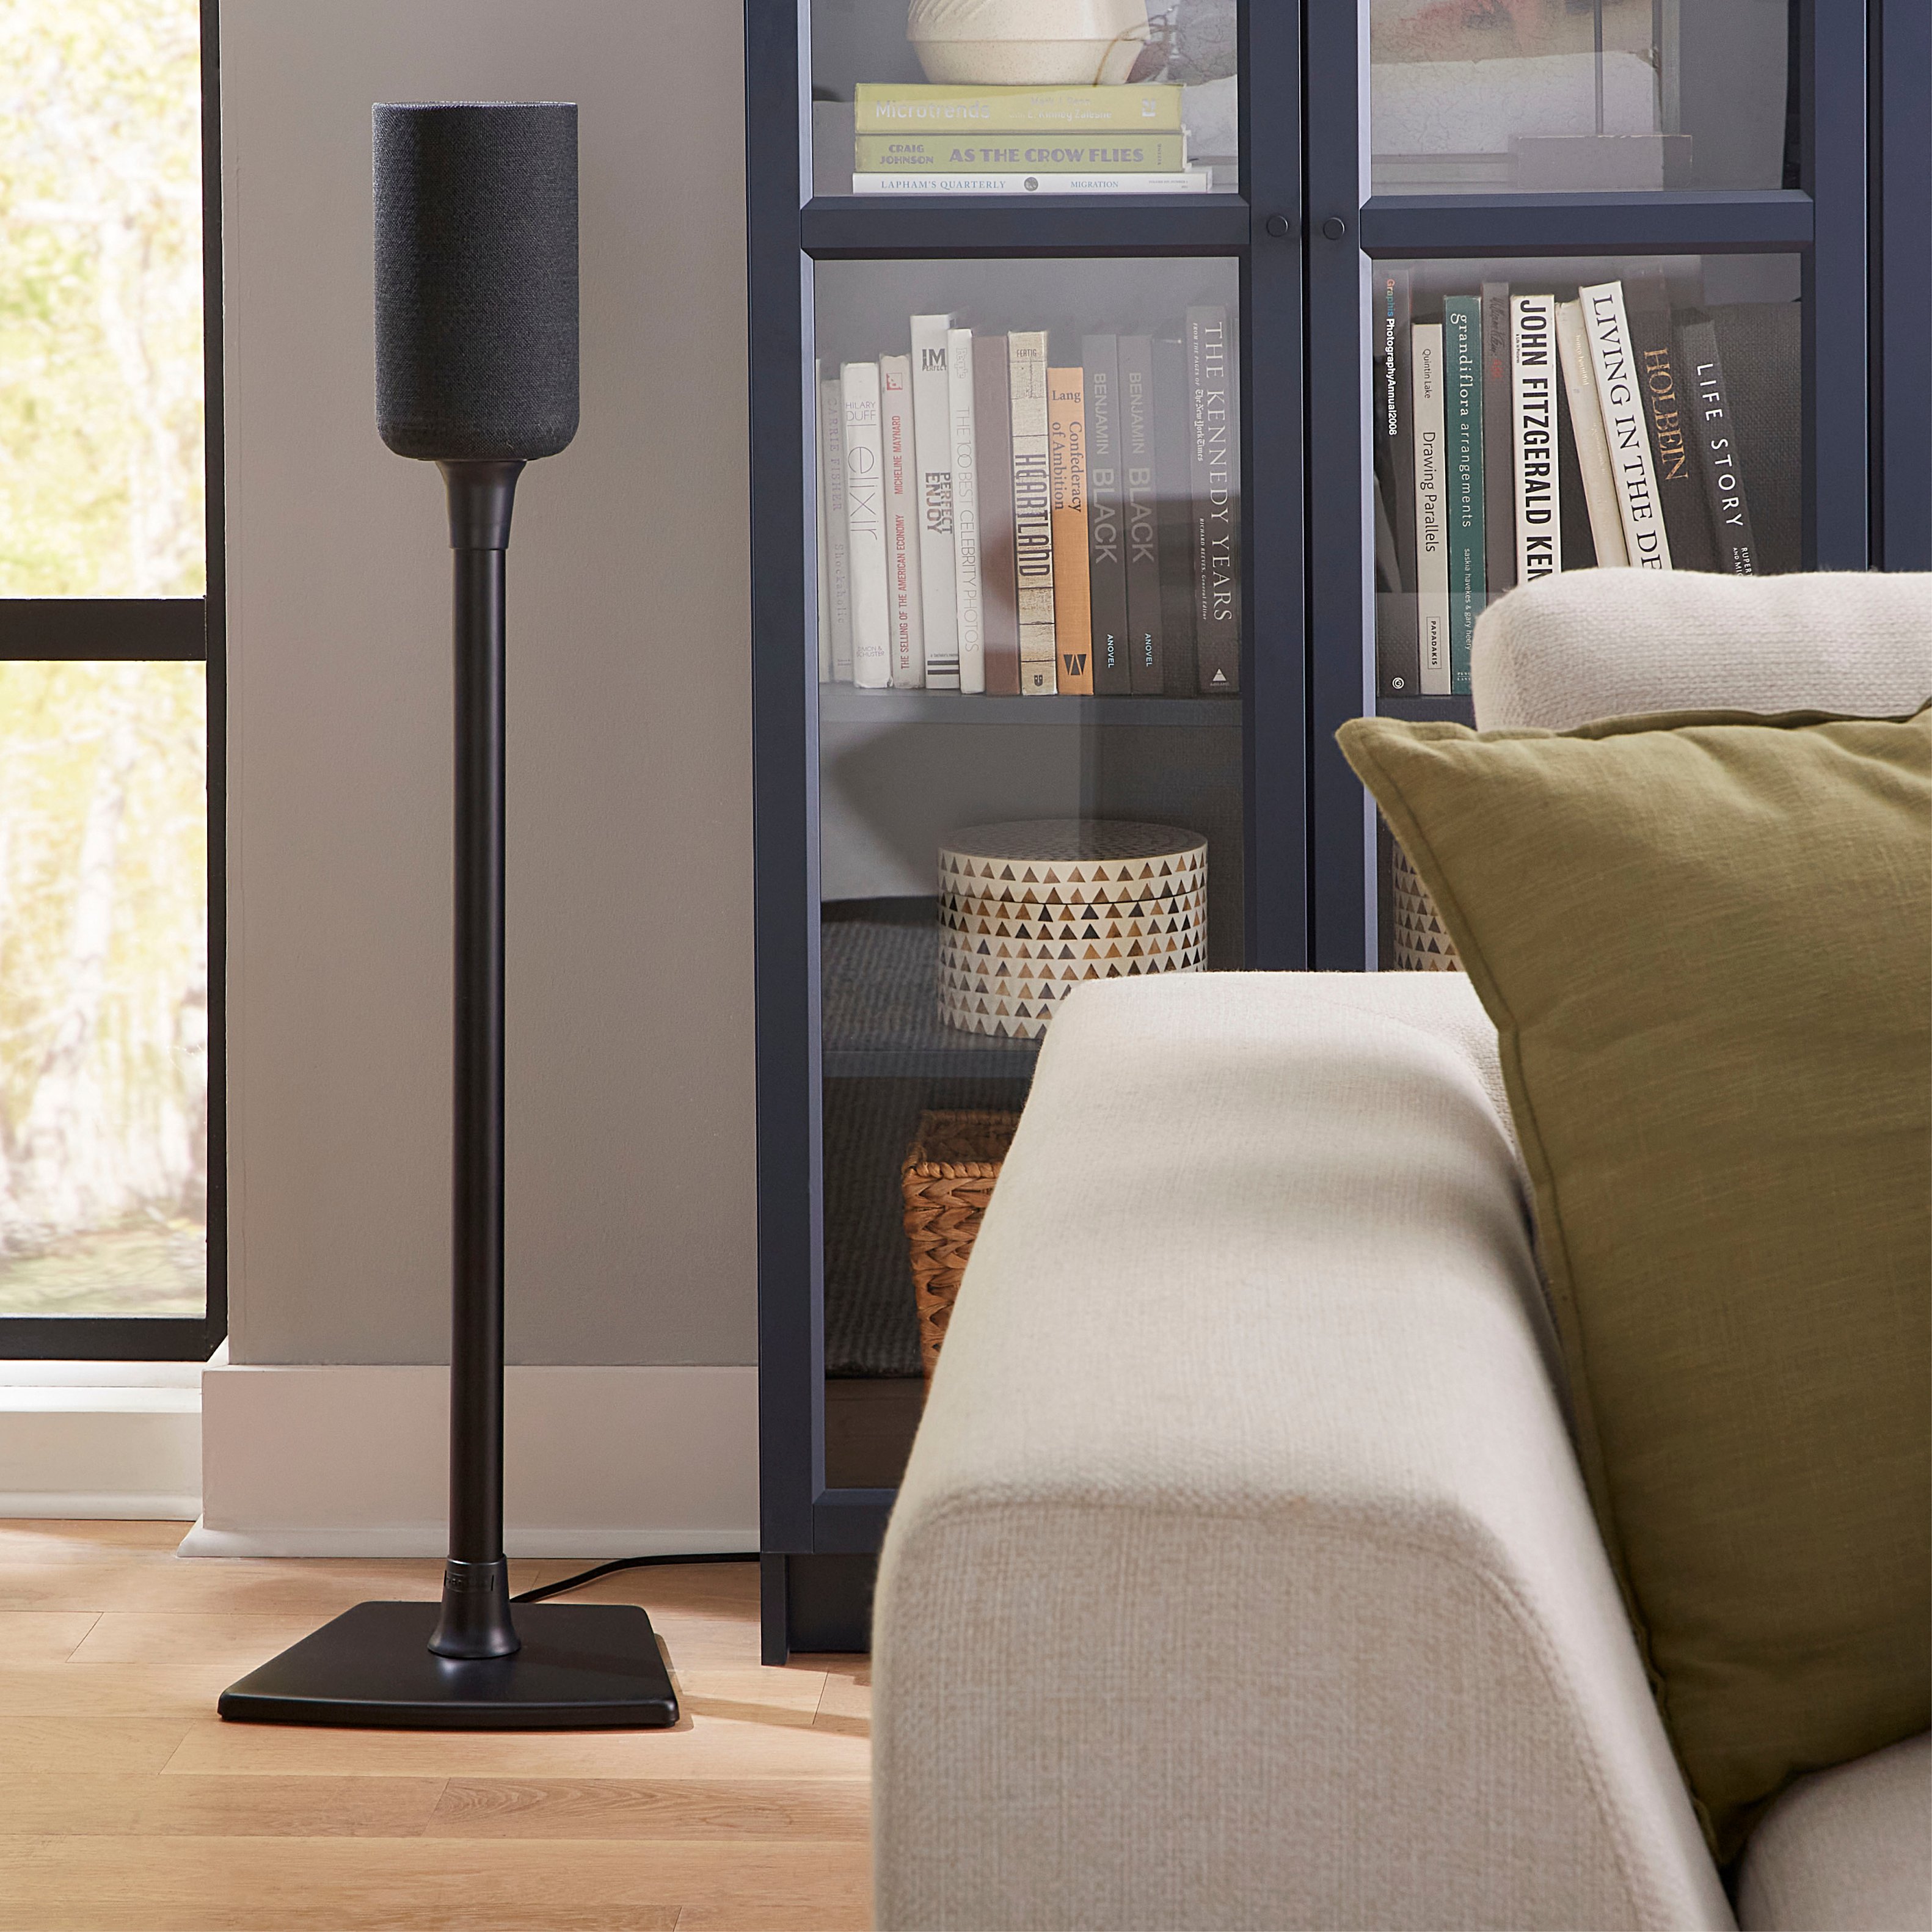 Sanus Universal Speaker Stands for Speakers Up to 8 lbs. - Black - 1 Each